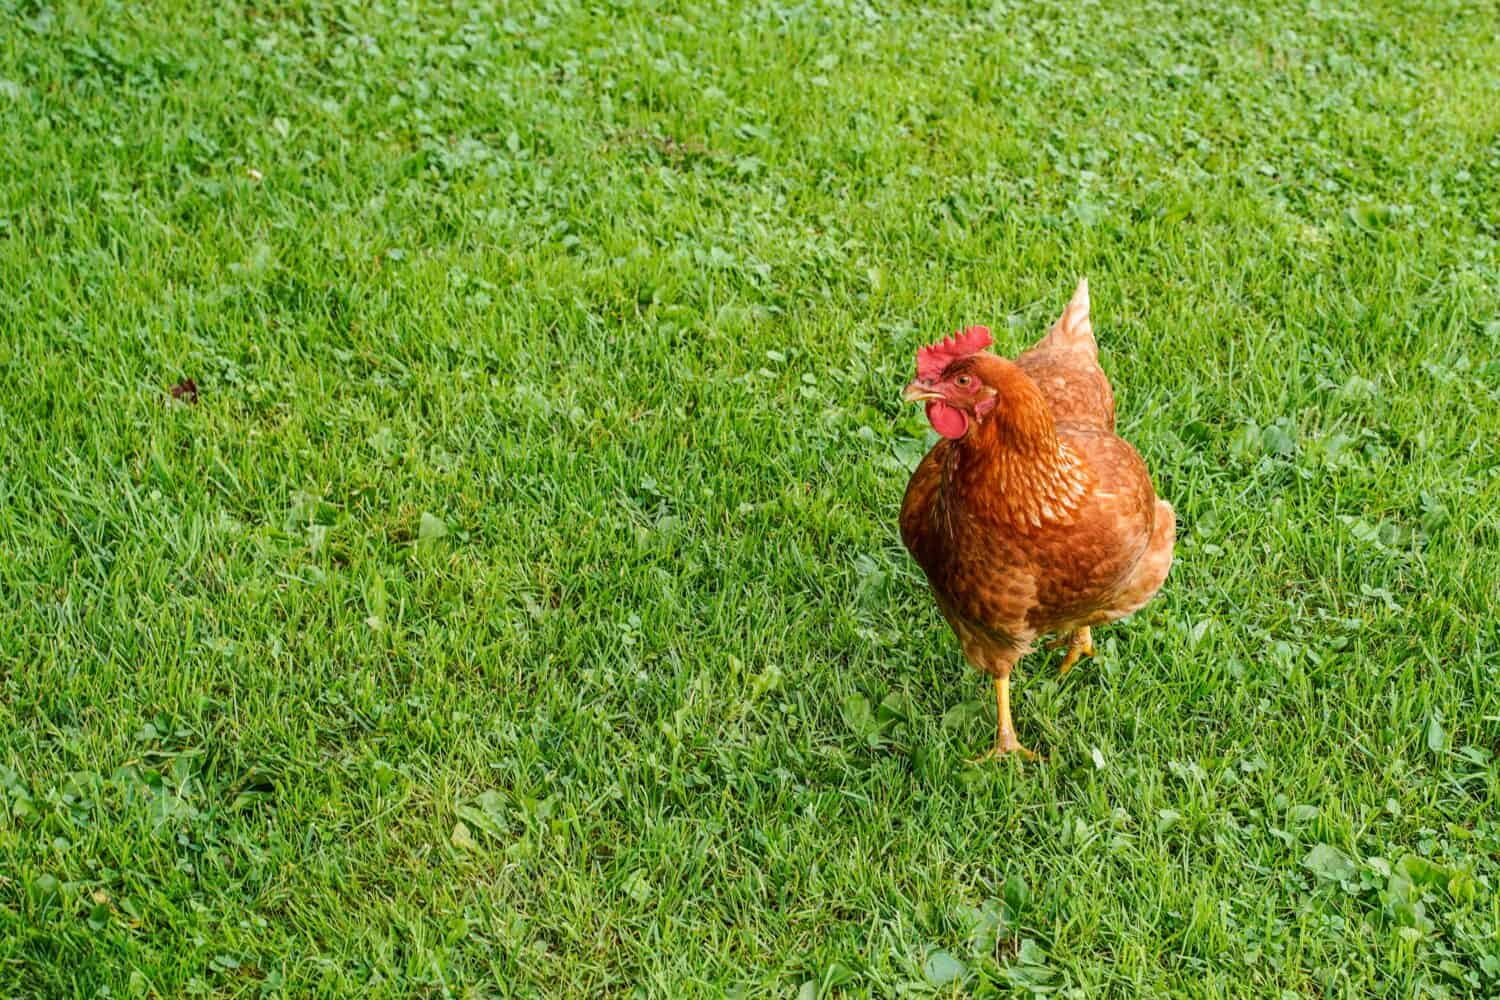 Single Cinnamon Queen Chicken standing in the grass outdoors.